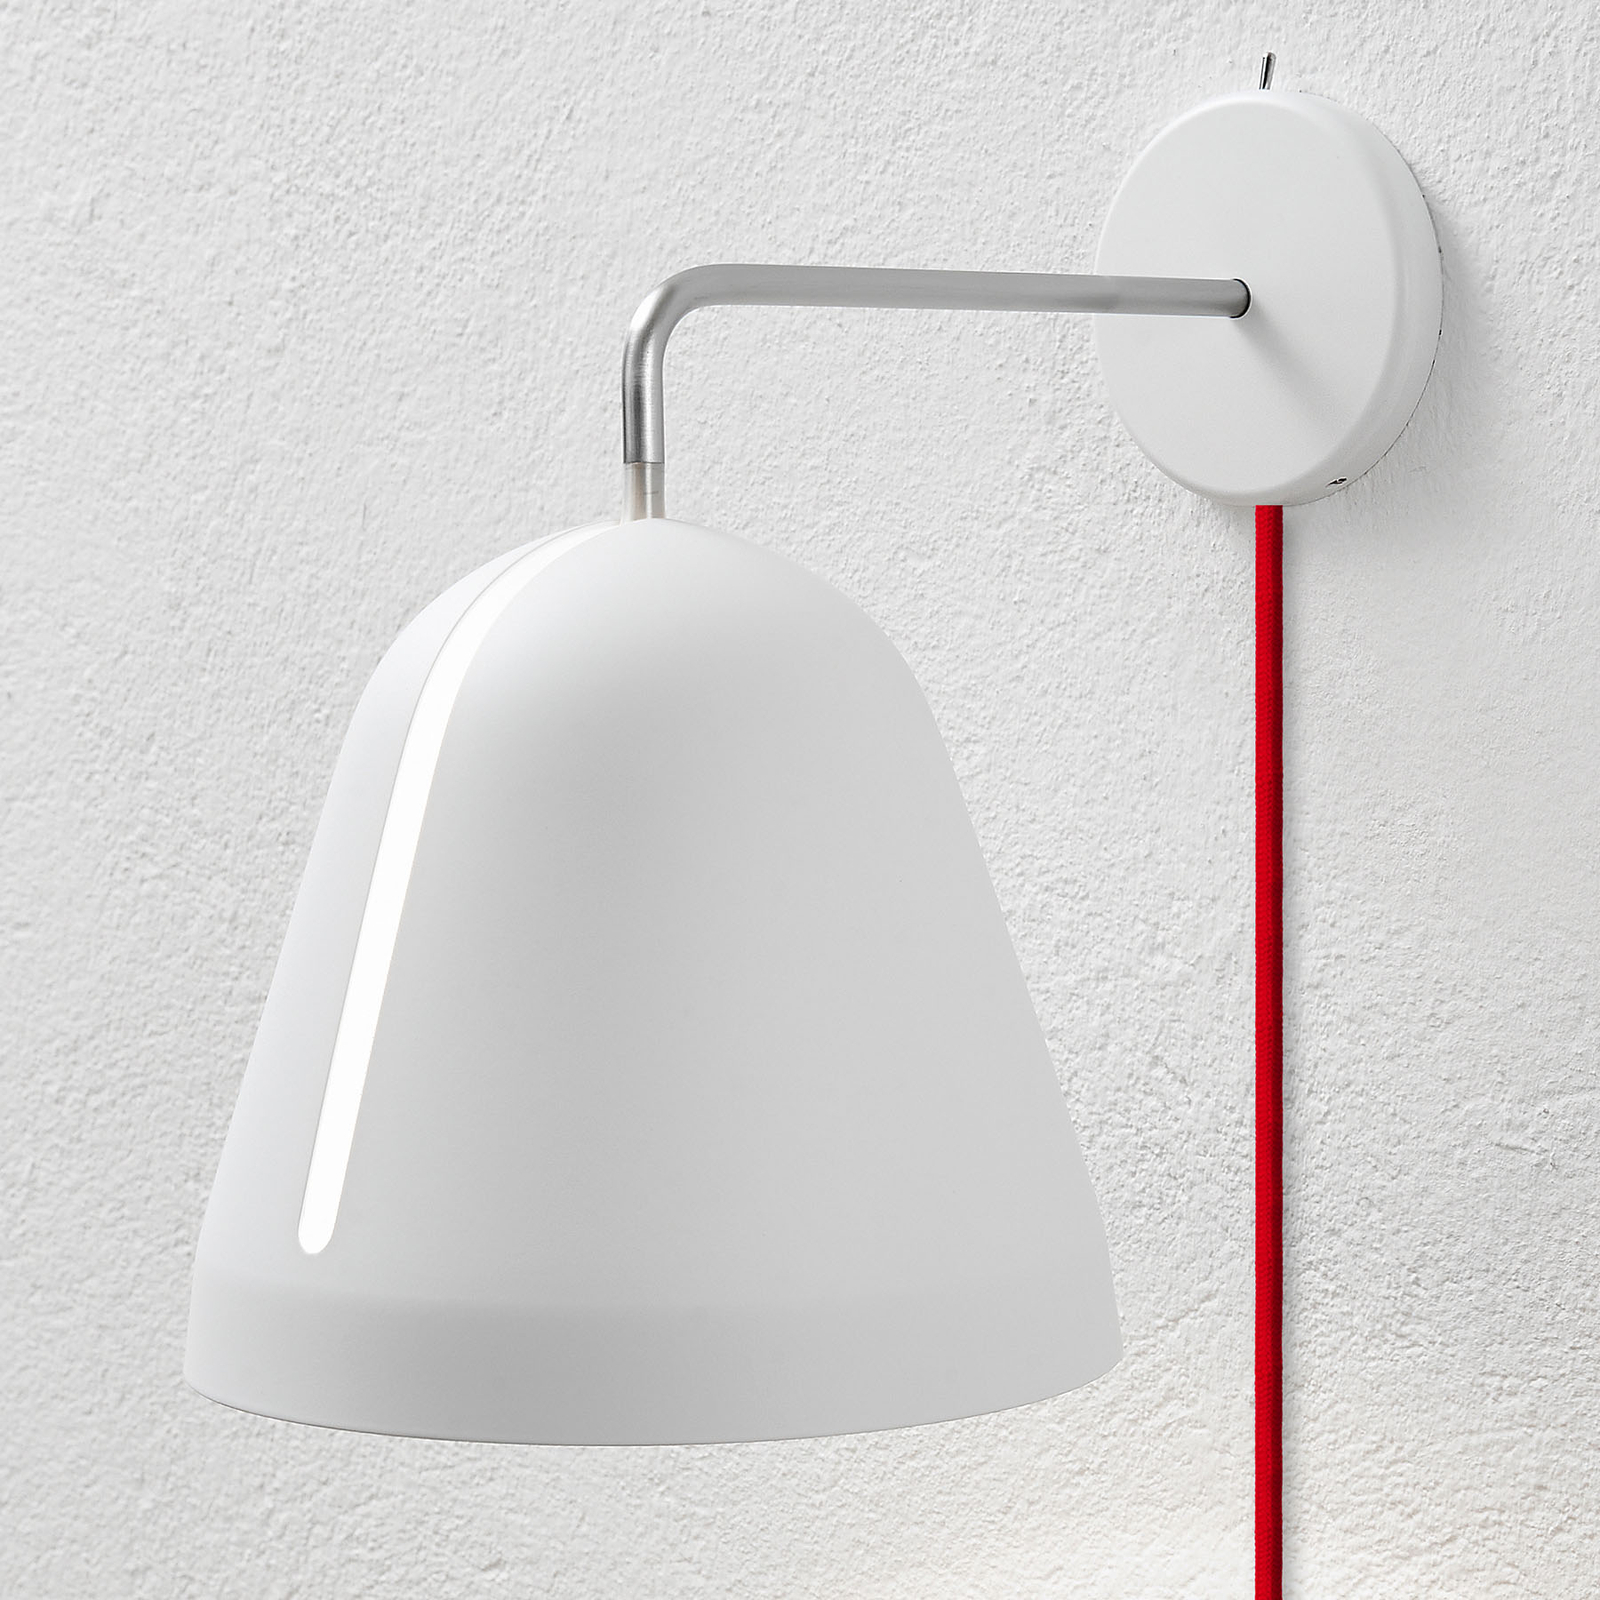 Nyta Tilt Wall wandlamp met kabel rood, wit